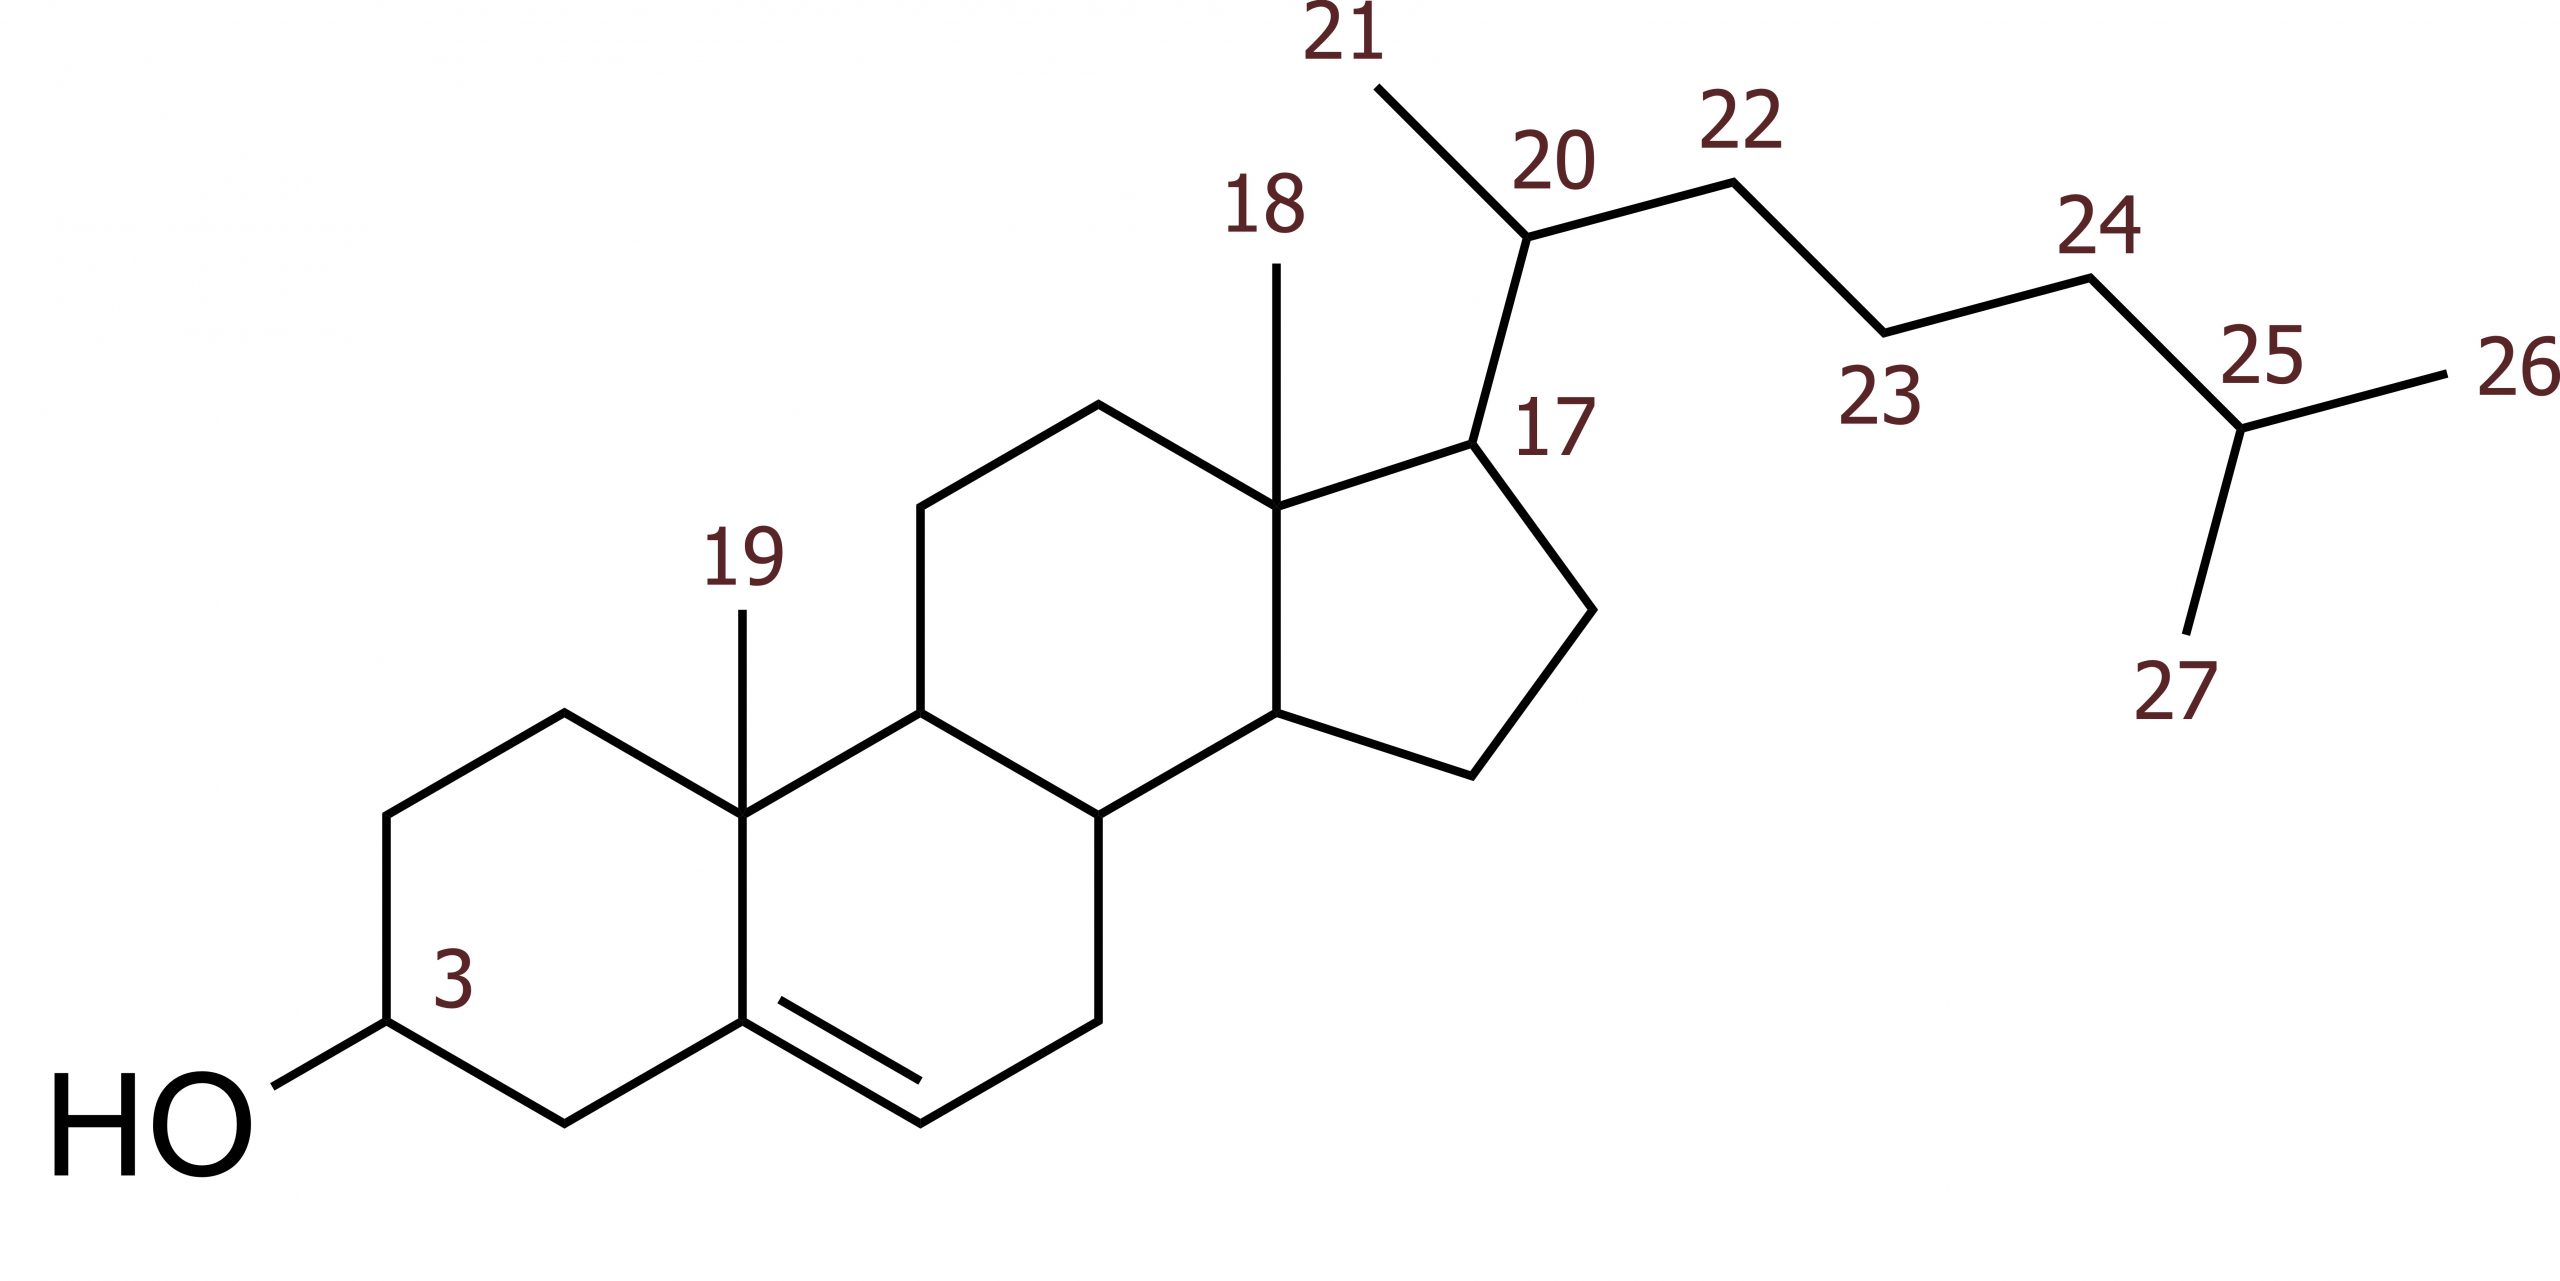 Cholesterol IUPAC: (3S,8S,9S,10R,13R,14S,17R)-10,13-dimethyl-17-[(2R)-6-methylheptan-2-yl]-2,3,4,7,8,9,11,12,14,15,16,17-dodecahydro-1H-cyclopenta[a]phenanthren-3-ol